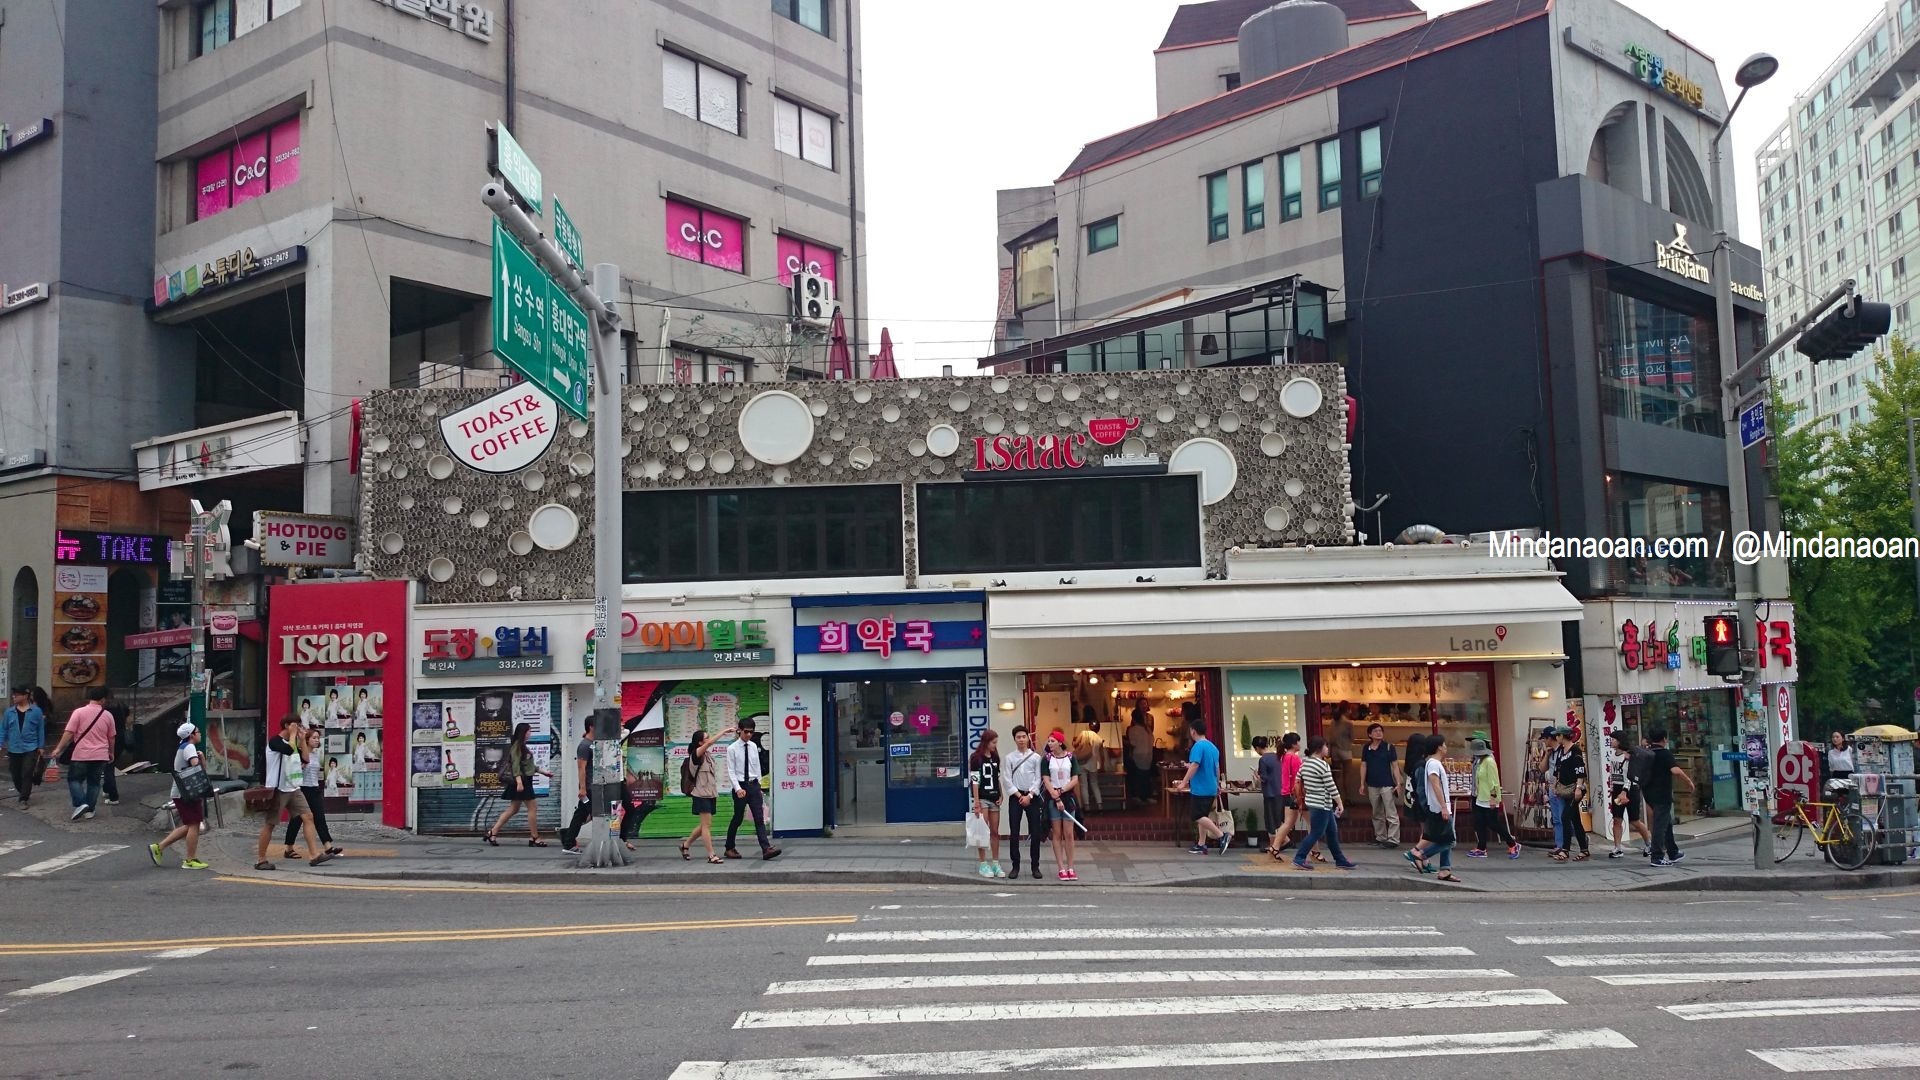 Mindanaoan In Korea Travel Series: Scenes in vibrant Hongdae Seoul